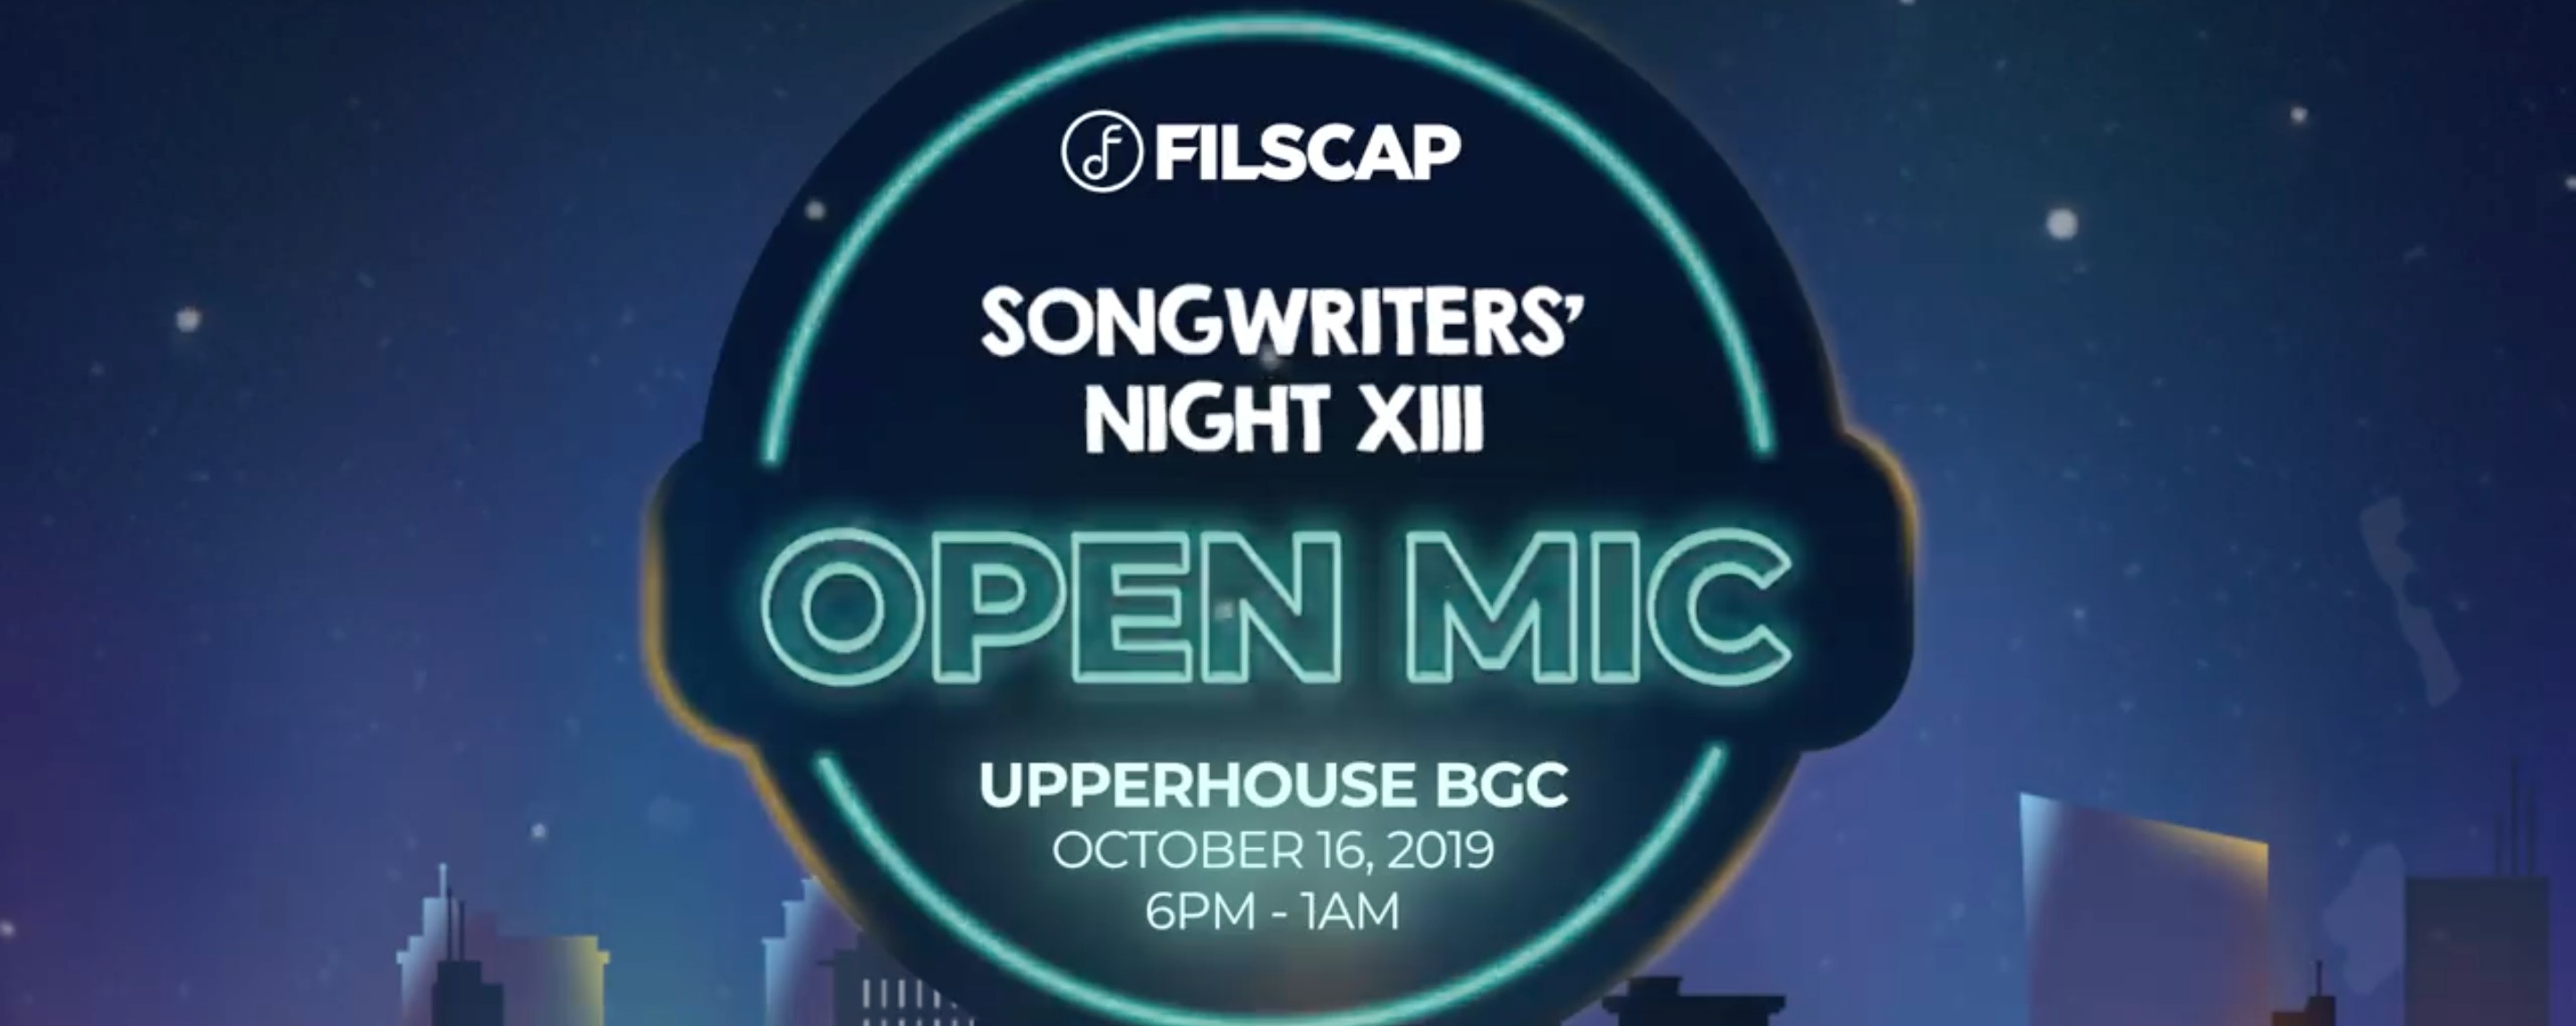 FILSCAP Songwriters' Night XIII | Upperhouse BGC